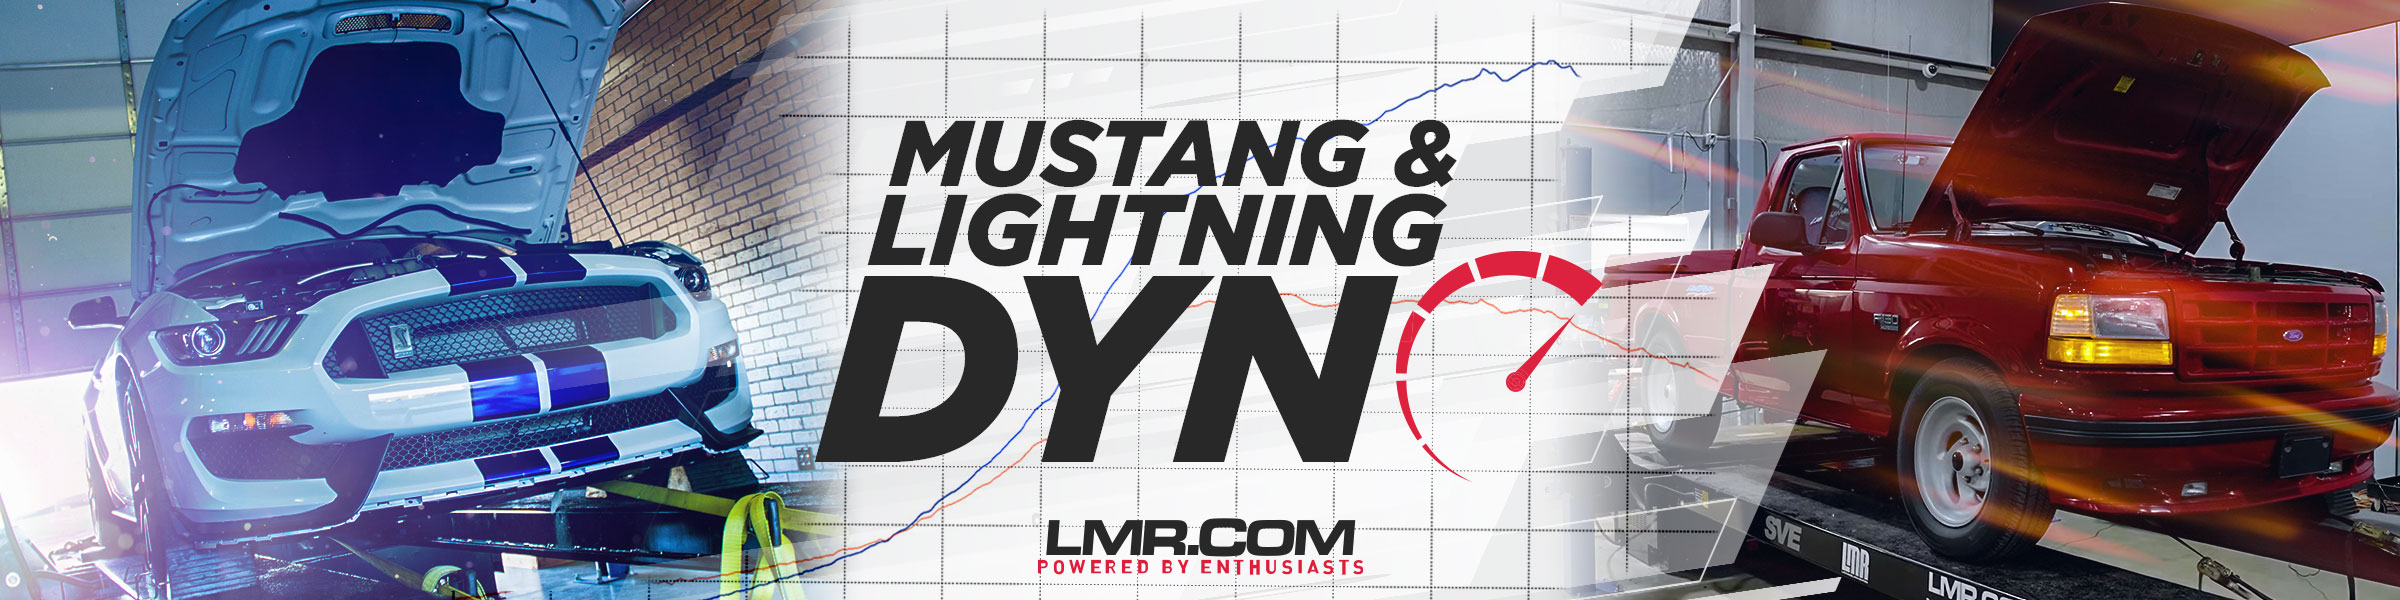 Mustang & Lightning Dyno Articles - Mustang & Lightning Dyno Articles